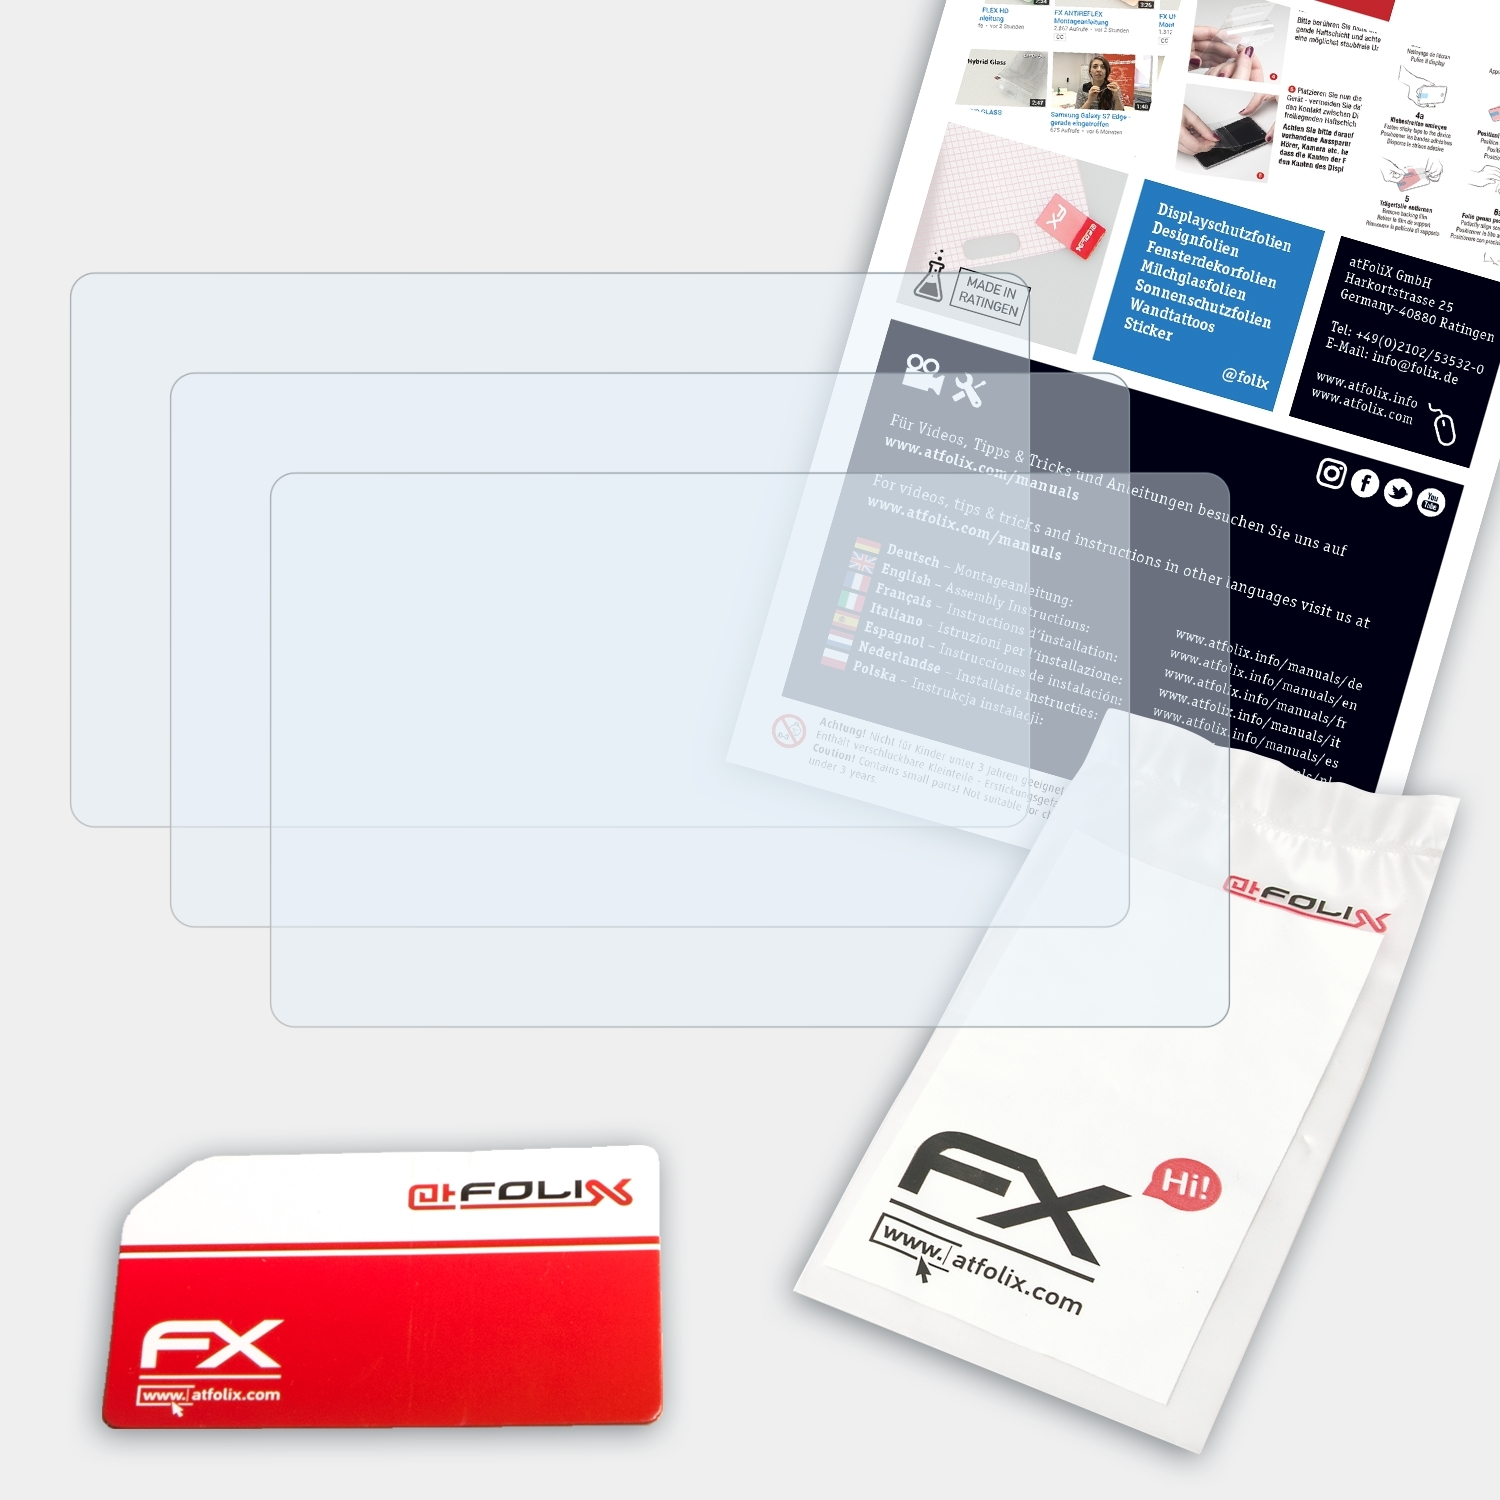 ATFOLIX 3x FX-Clear Displayschutz(für Alpha a6100) Sony